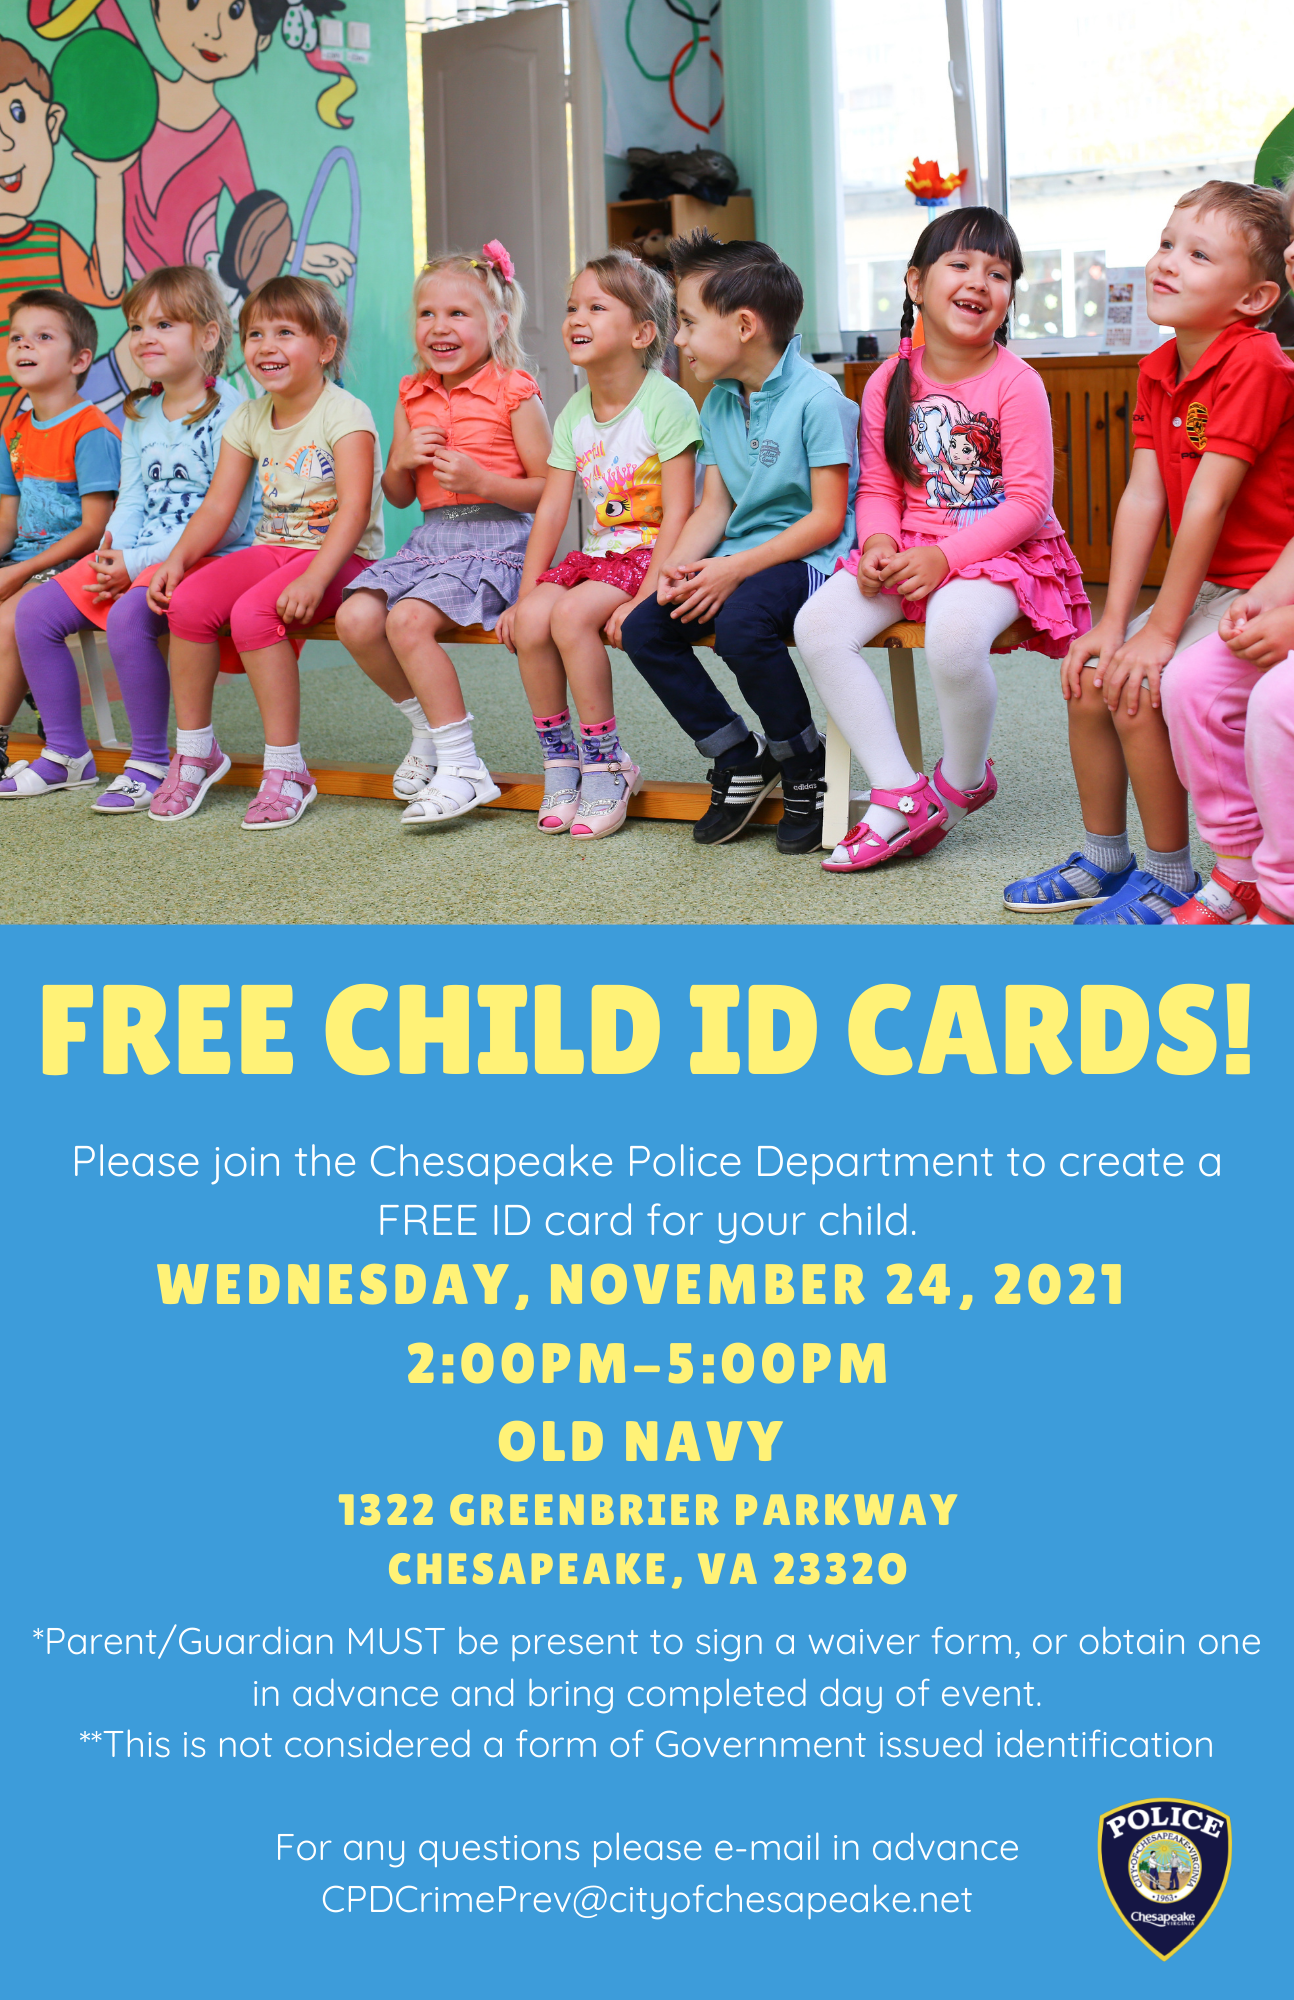 Free Child ID Cards Chesapeake Police Department Nextdoor Nextdoor